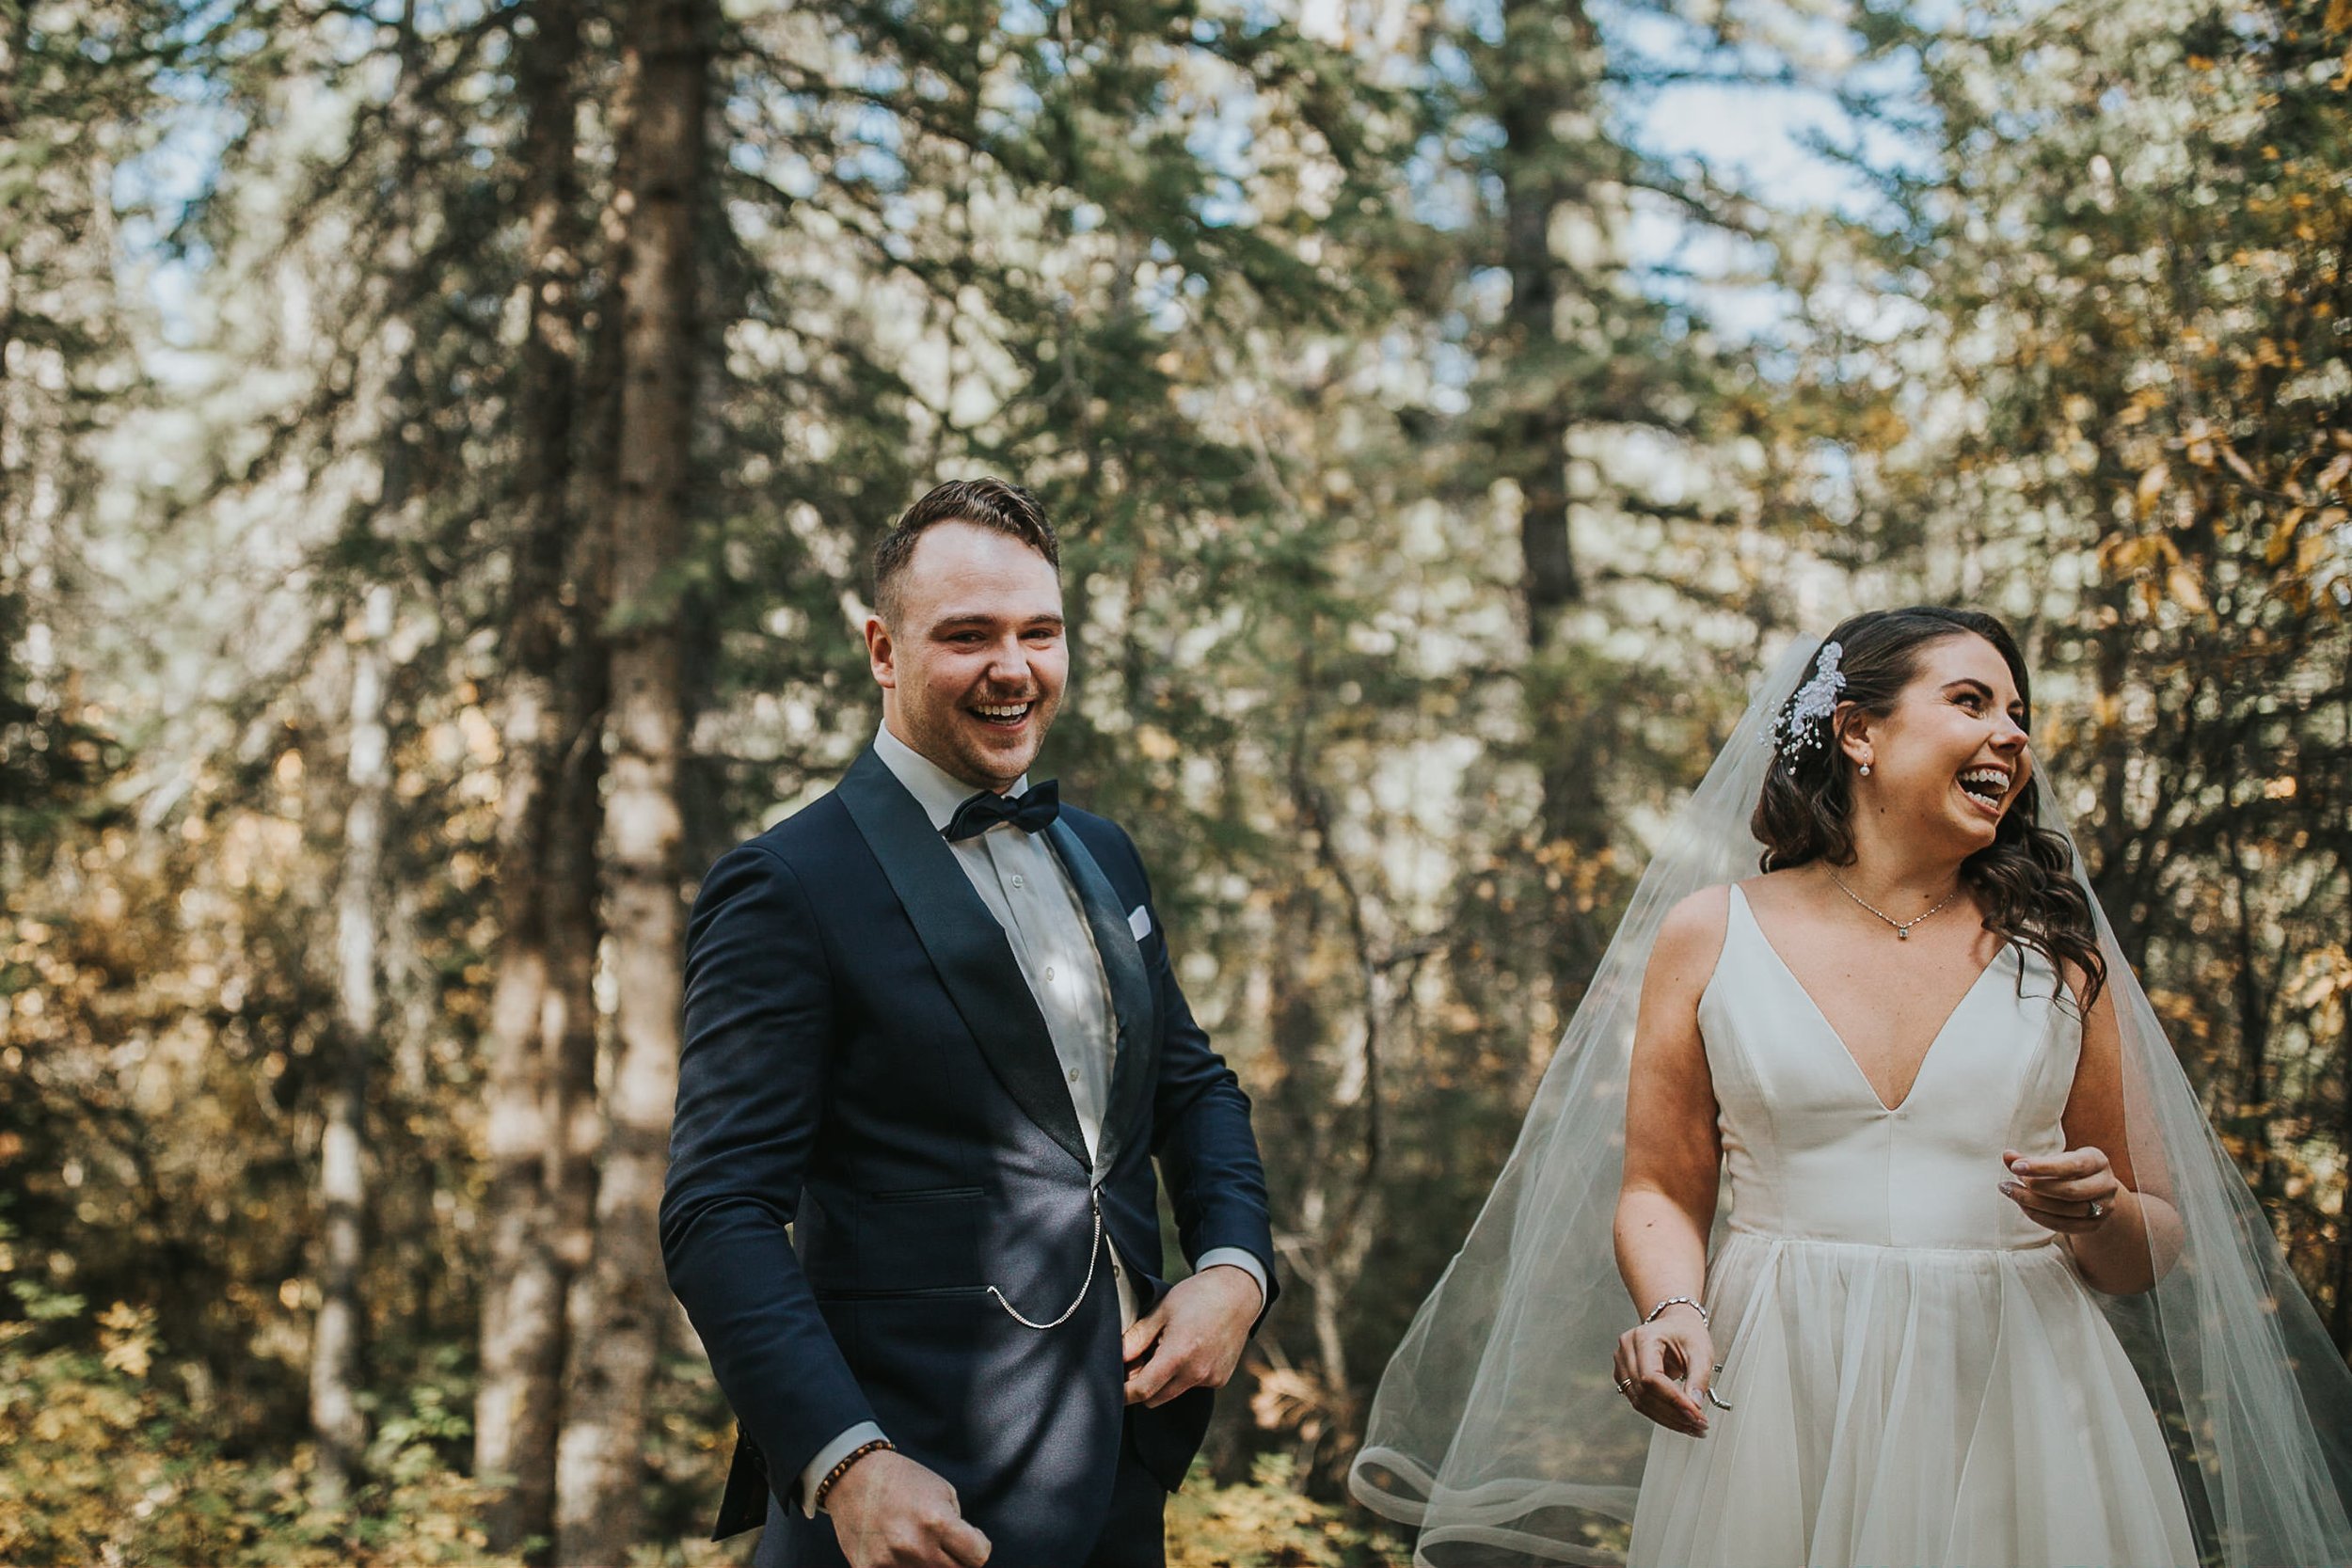 Canmore-Banff-Norquay-Wedding-Mint-Photography-41.jpg